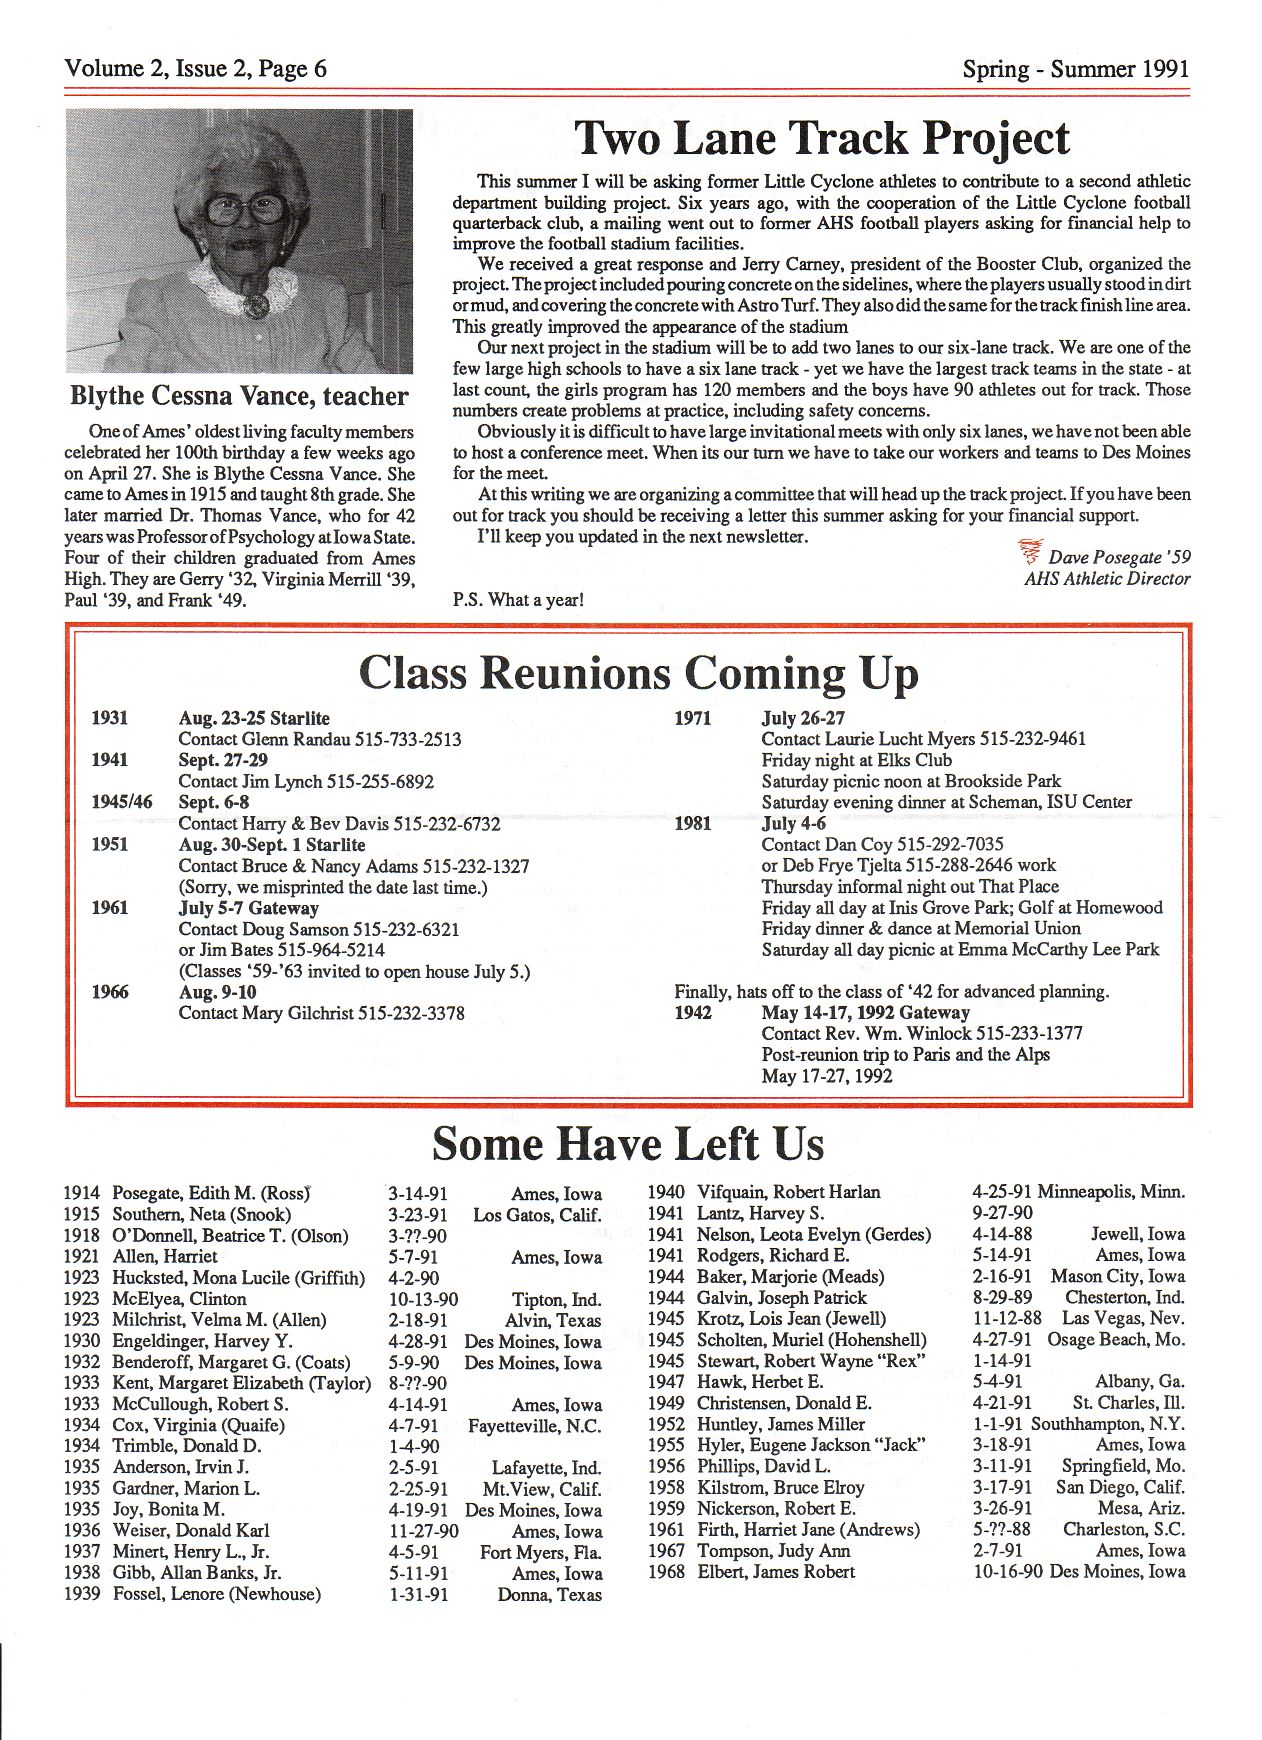 1991 page 6 Ames High School Alumni Assoc. spring-summer newsletter volume 2 issue 2